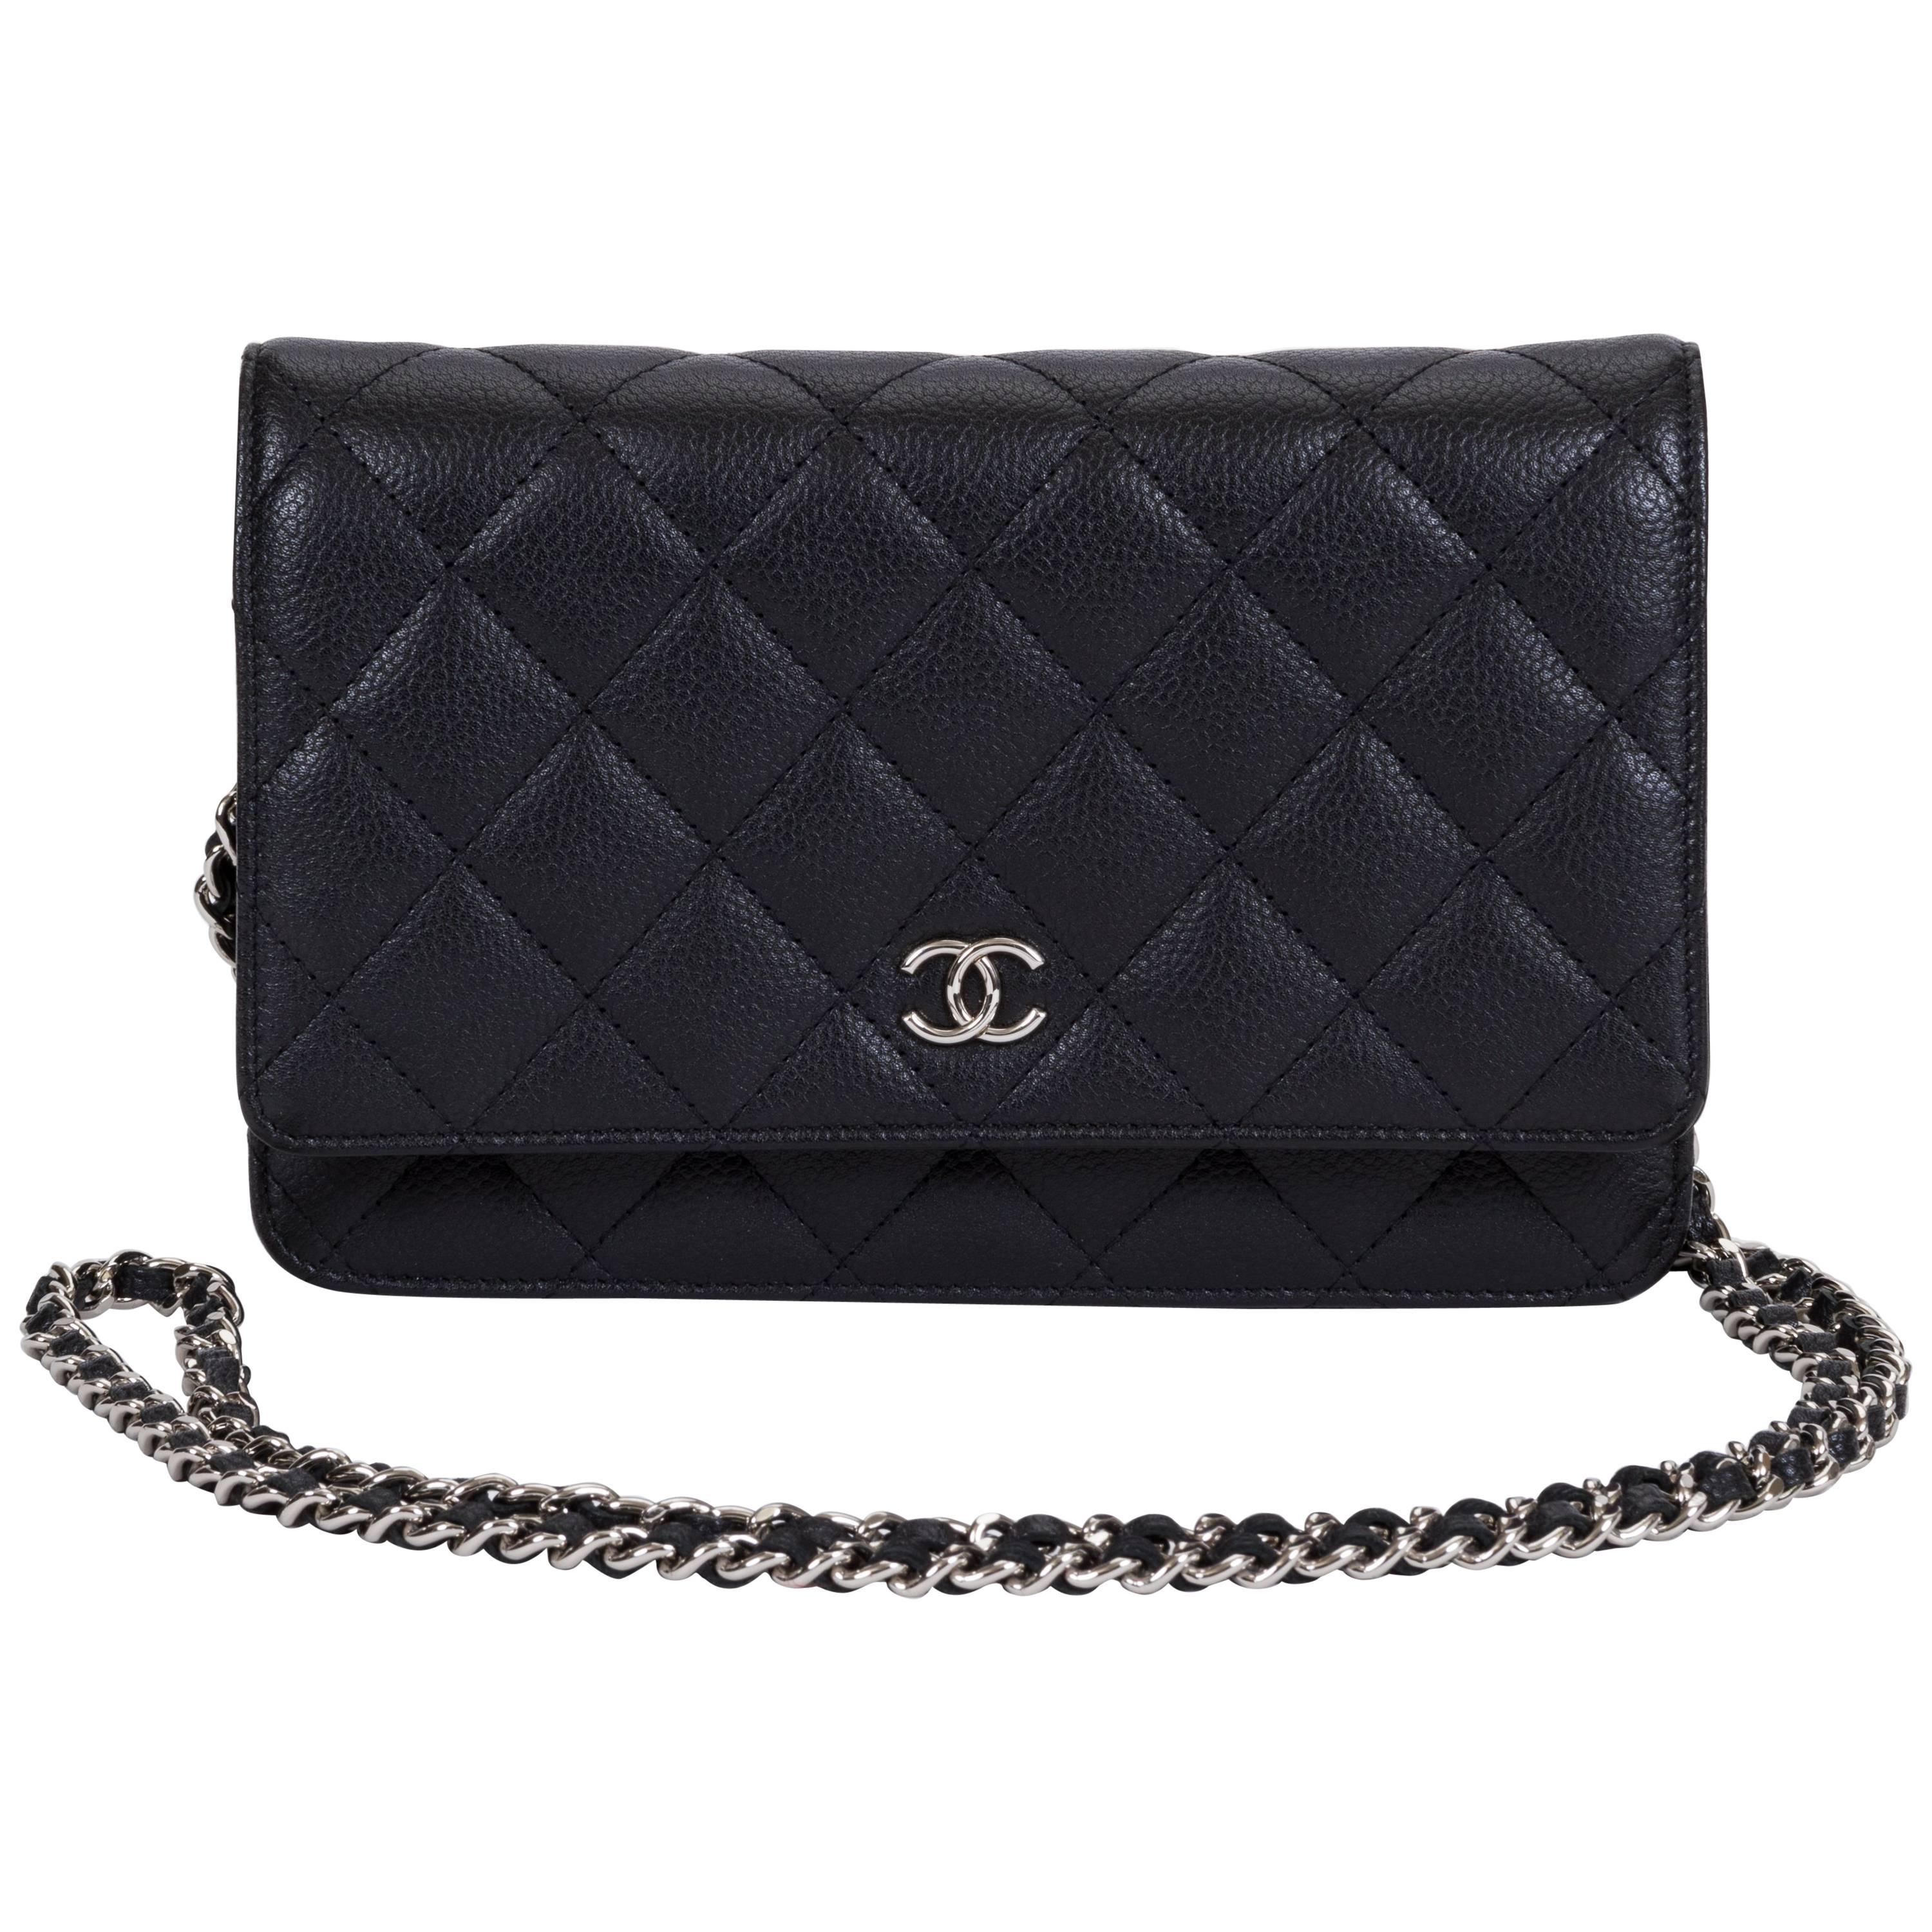 Chanel Black Caviar Wallet On A Chain Bag